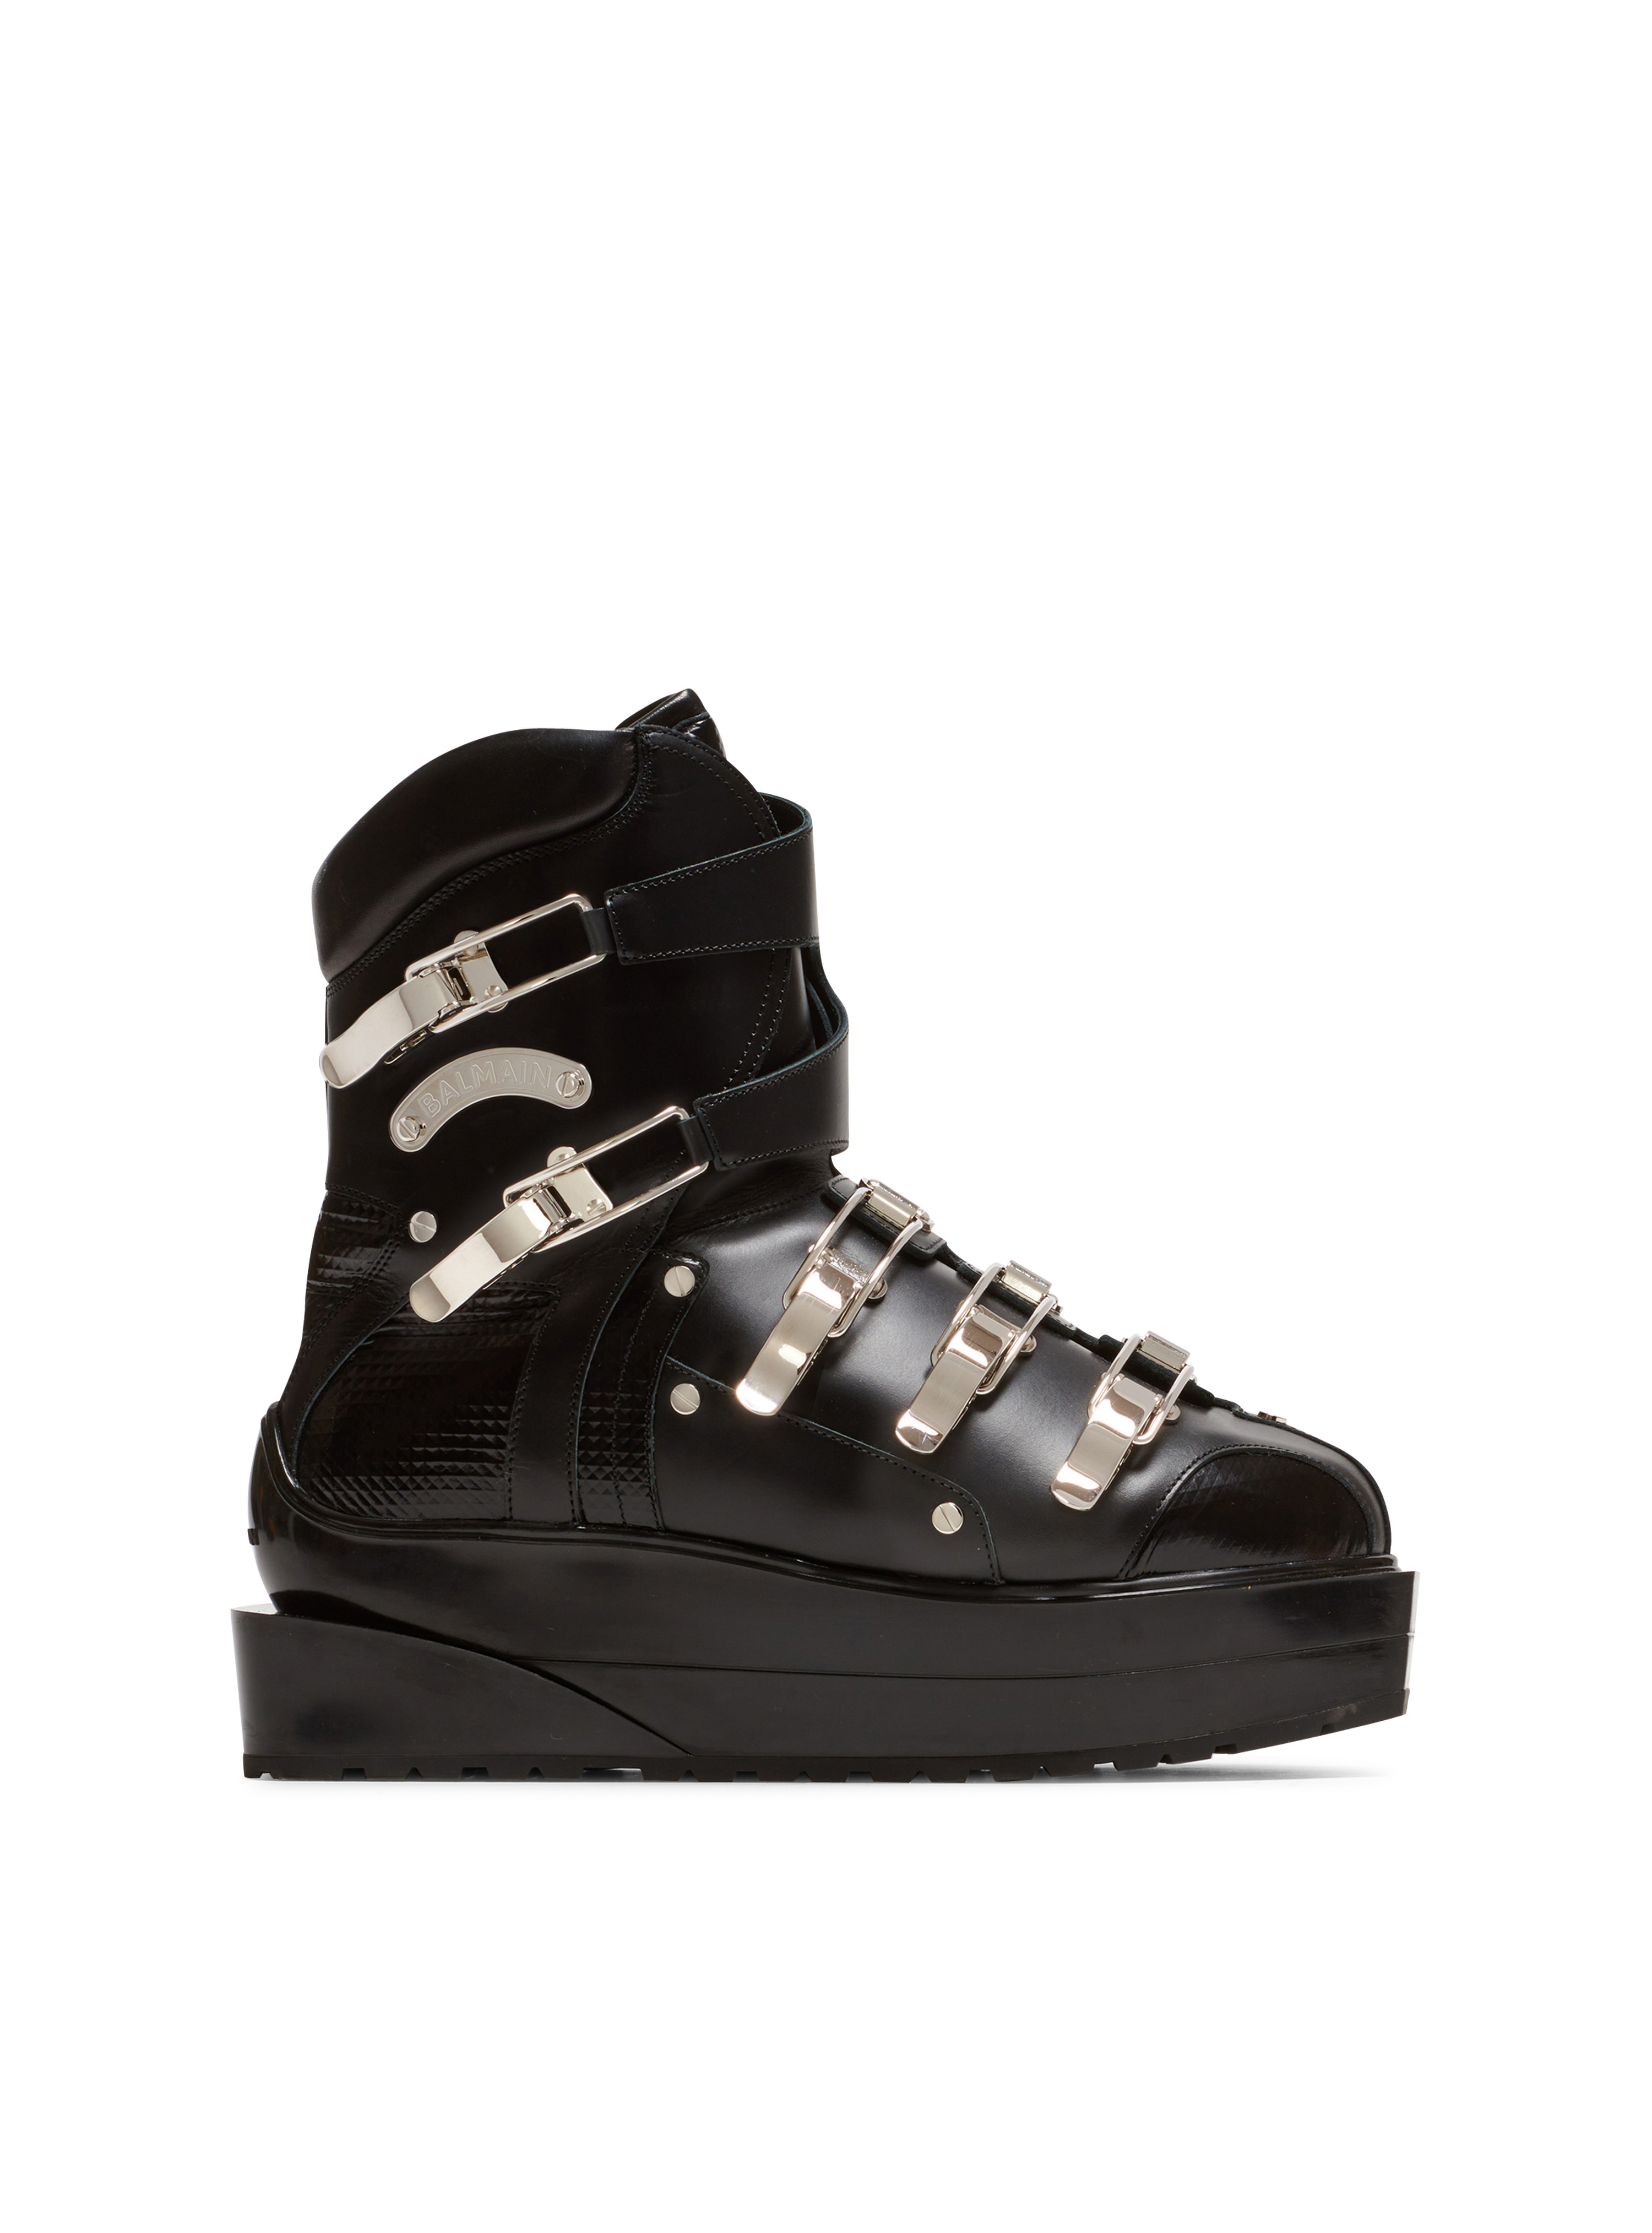 Volt leather boots, black